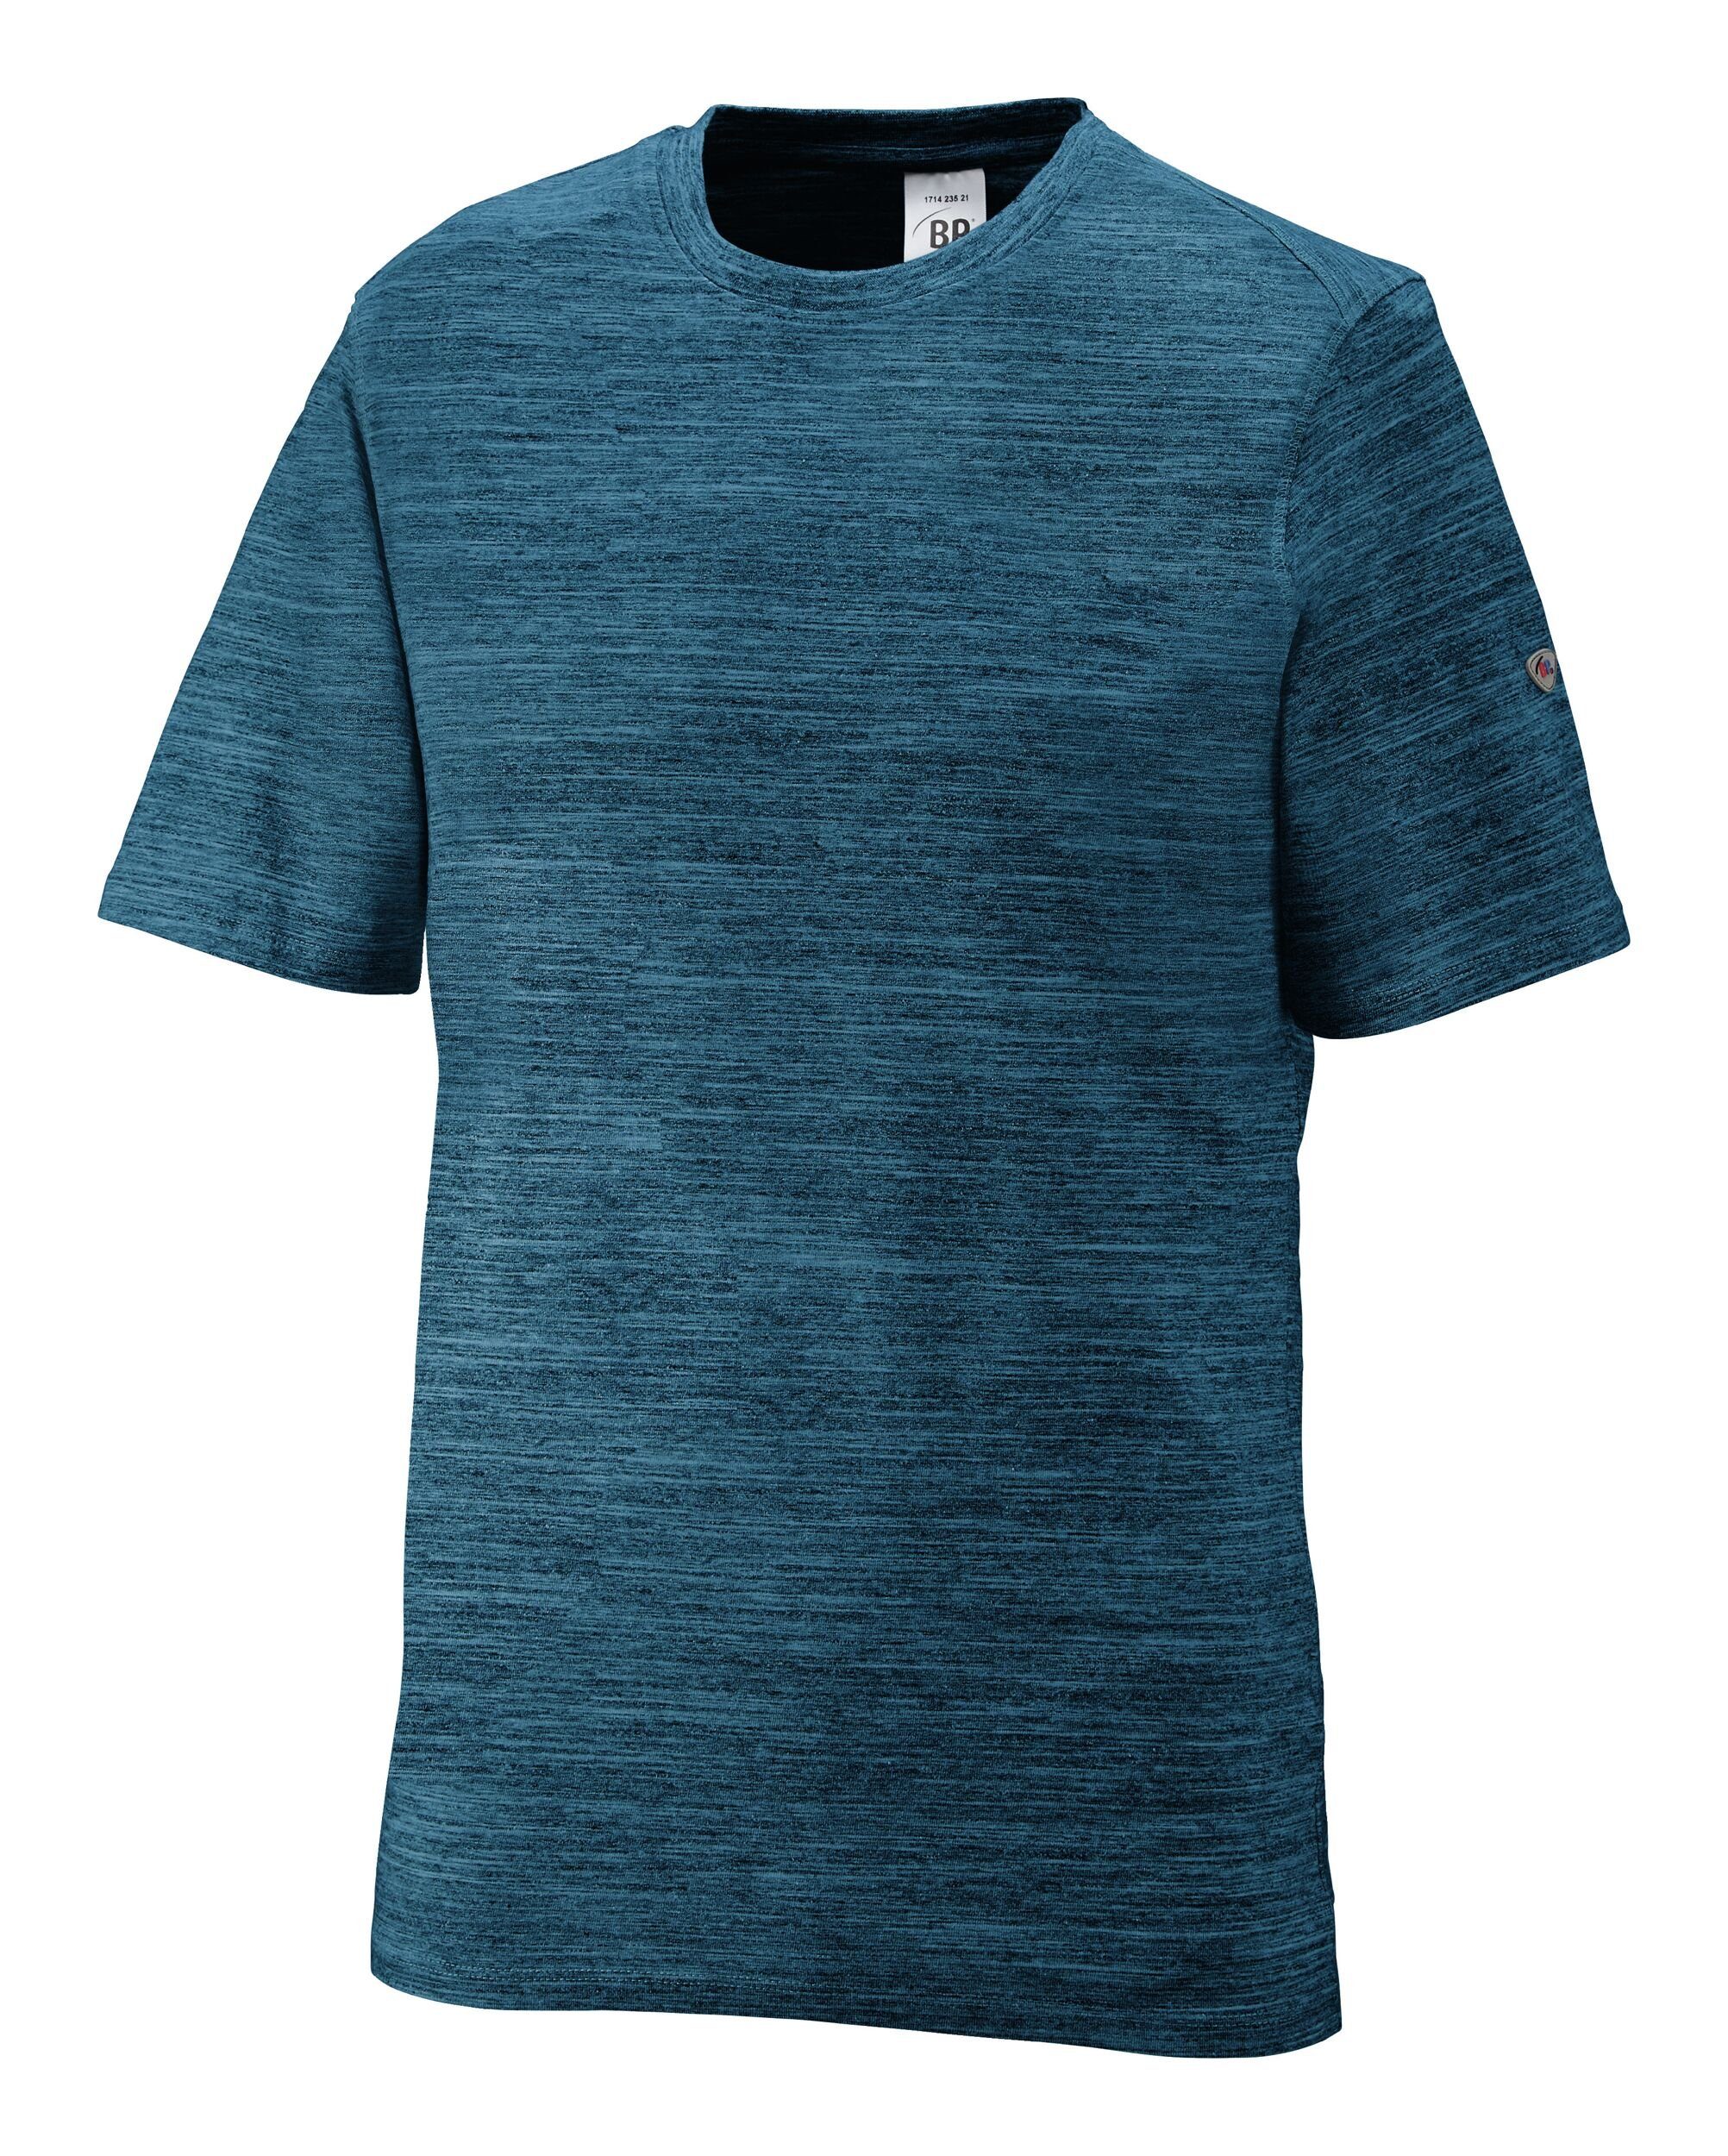 bp T-Shirt 1714, space nachtblau, Розмір 3XL